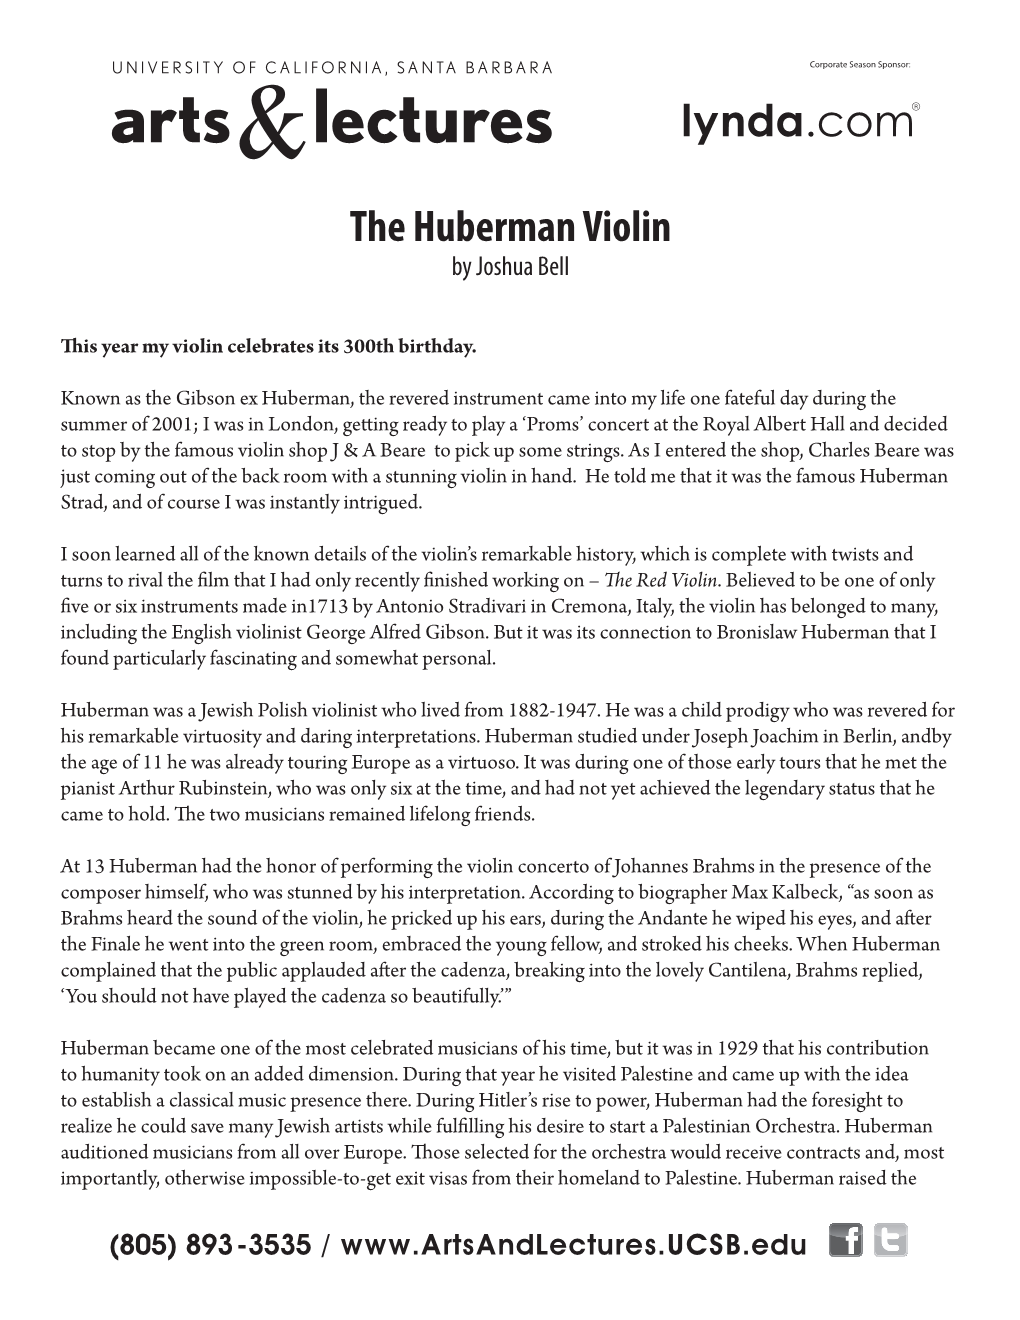 The Huberman Violin by Joshua Bell